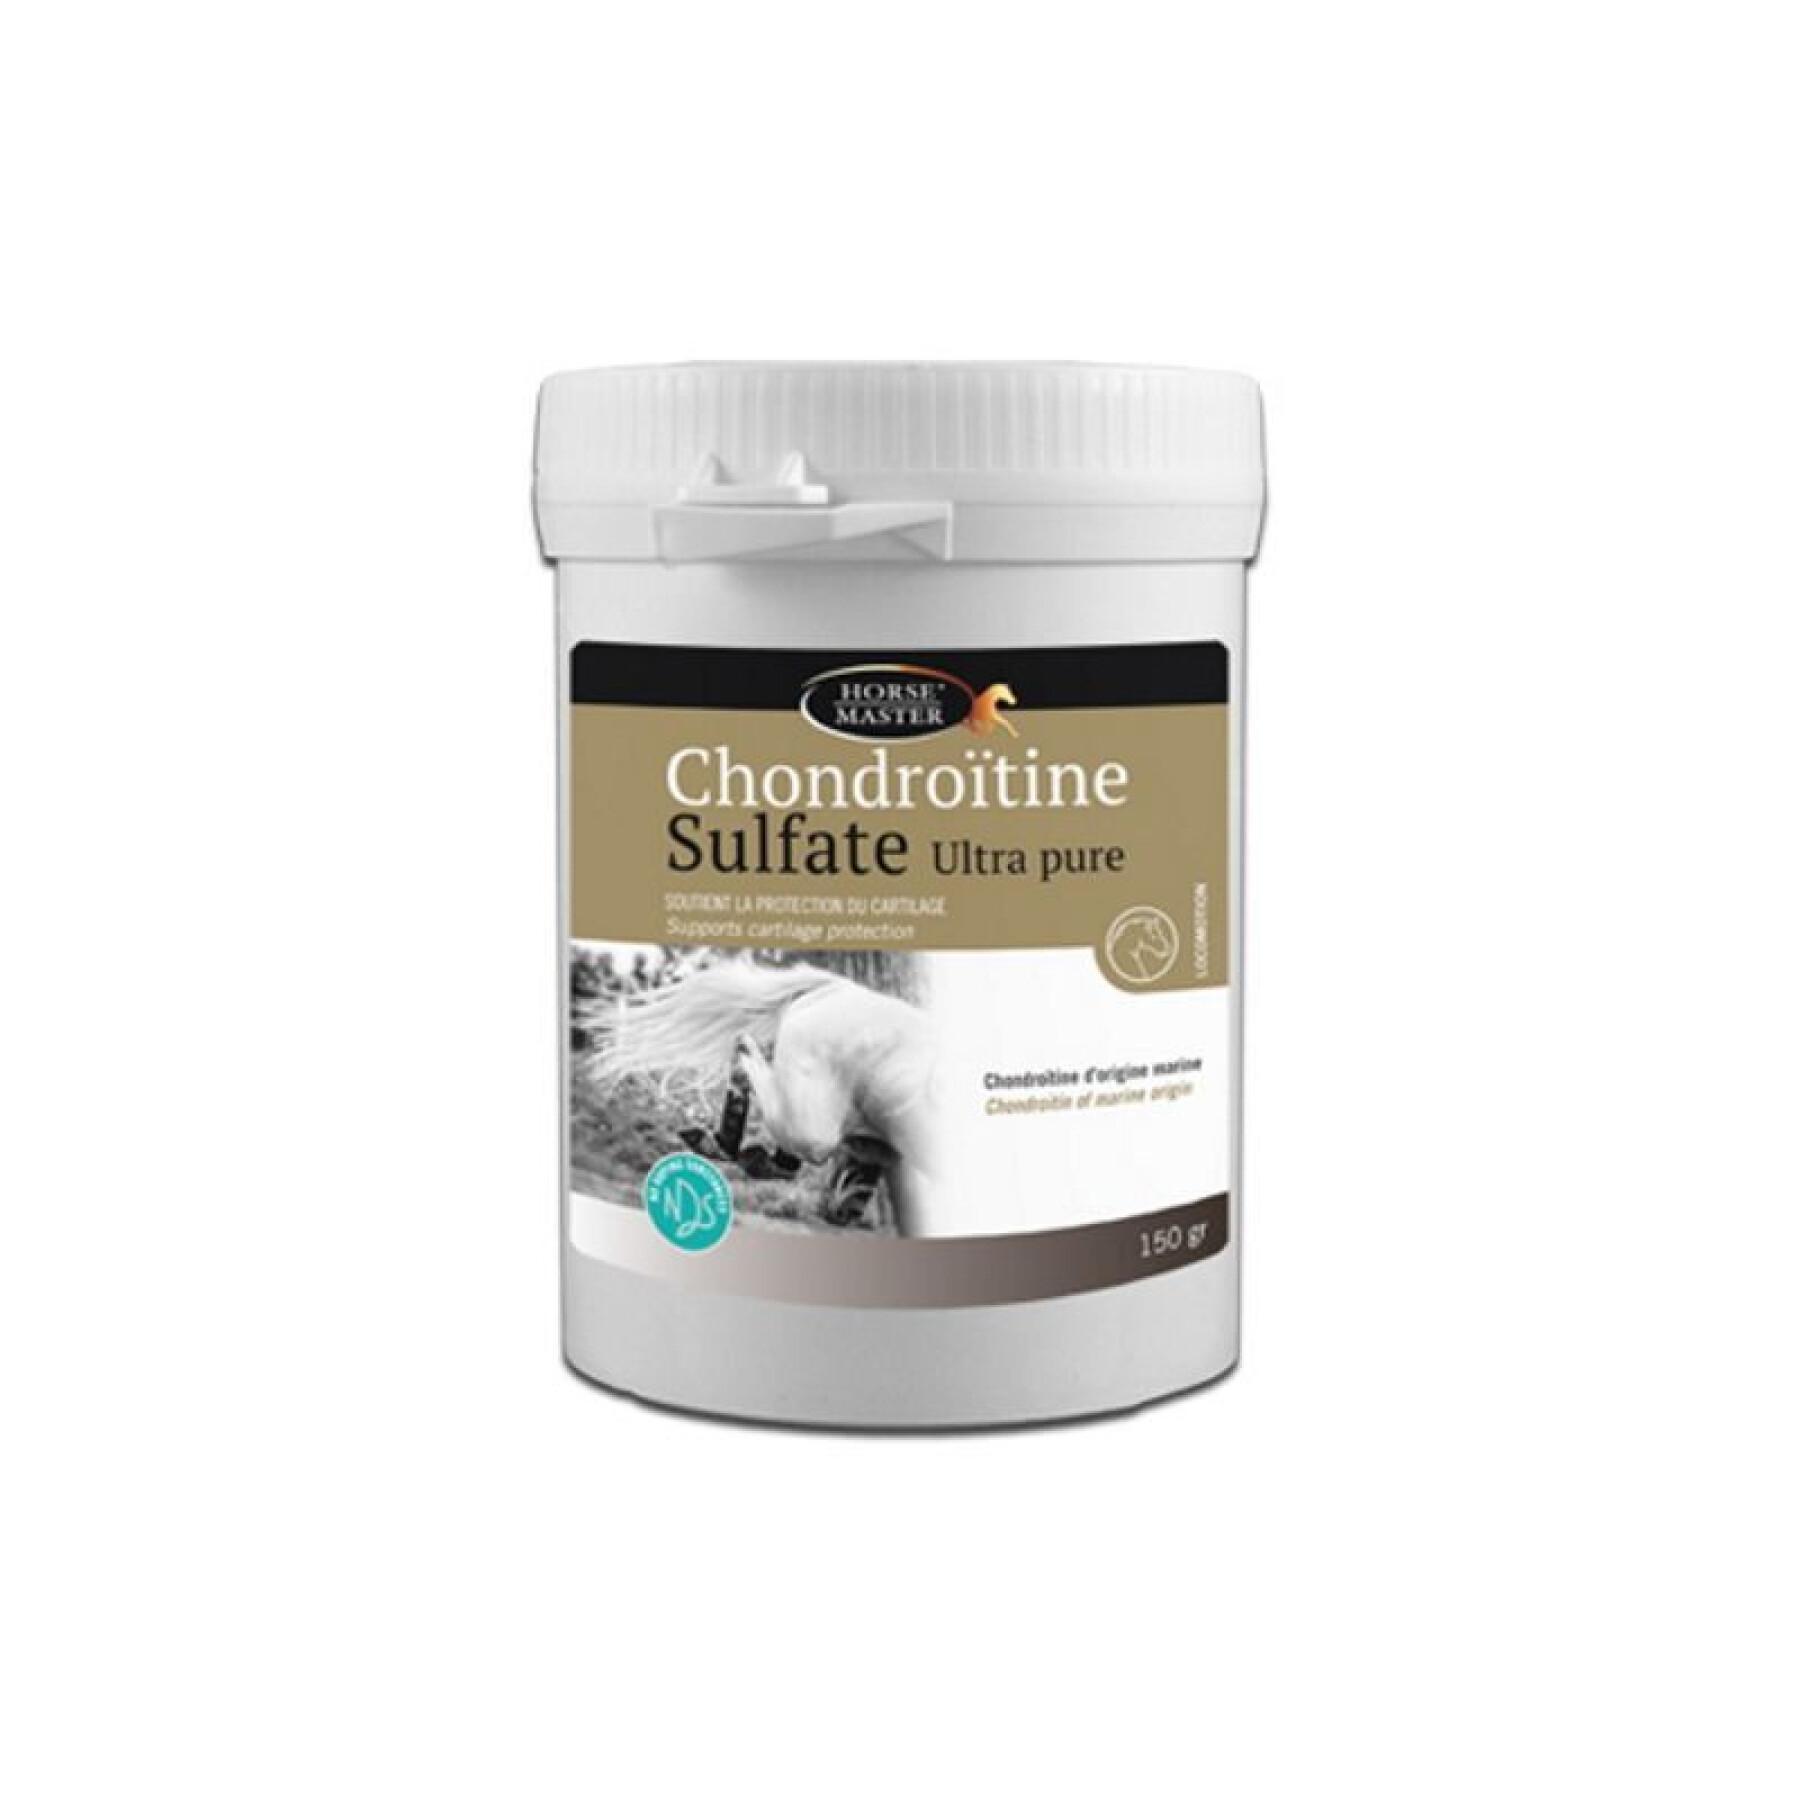 Suplemento alimentar para apoio conjunto a cavalos Horse Master Chondroitine Sulfate Ultra Pure